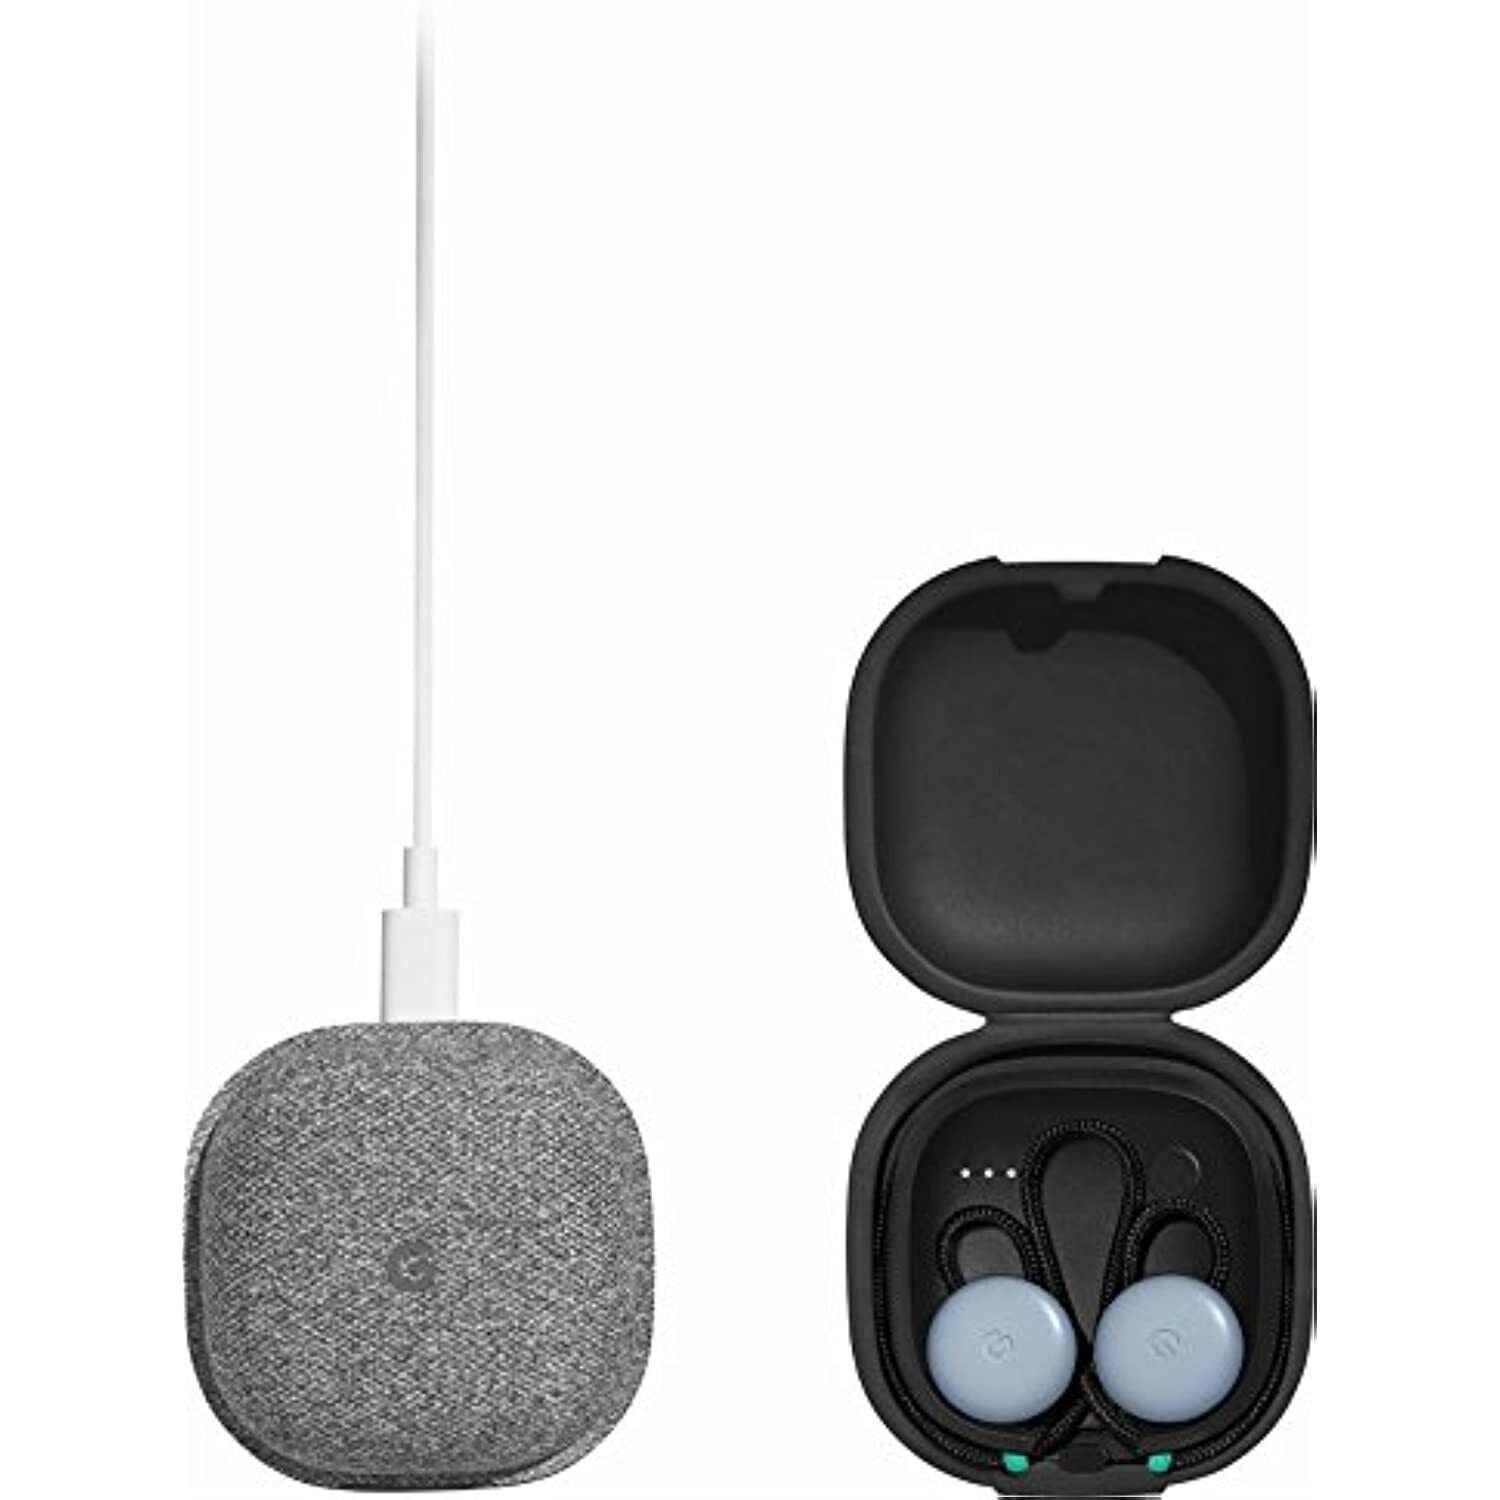 Google Pixel Buds A-Series True Wireless In-Ear Headphones - Blue (Certified Refurbished)